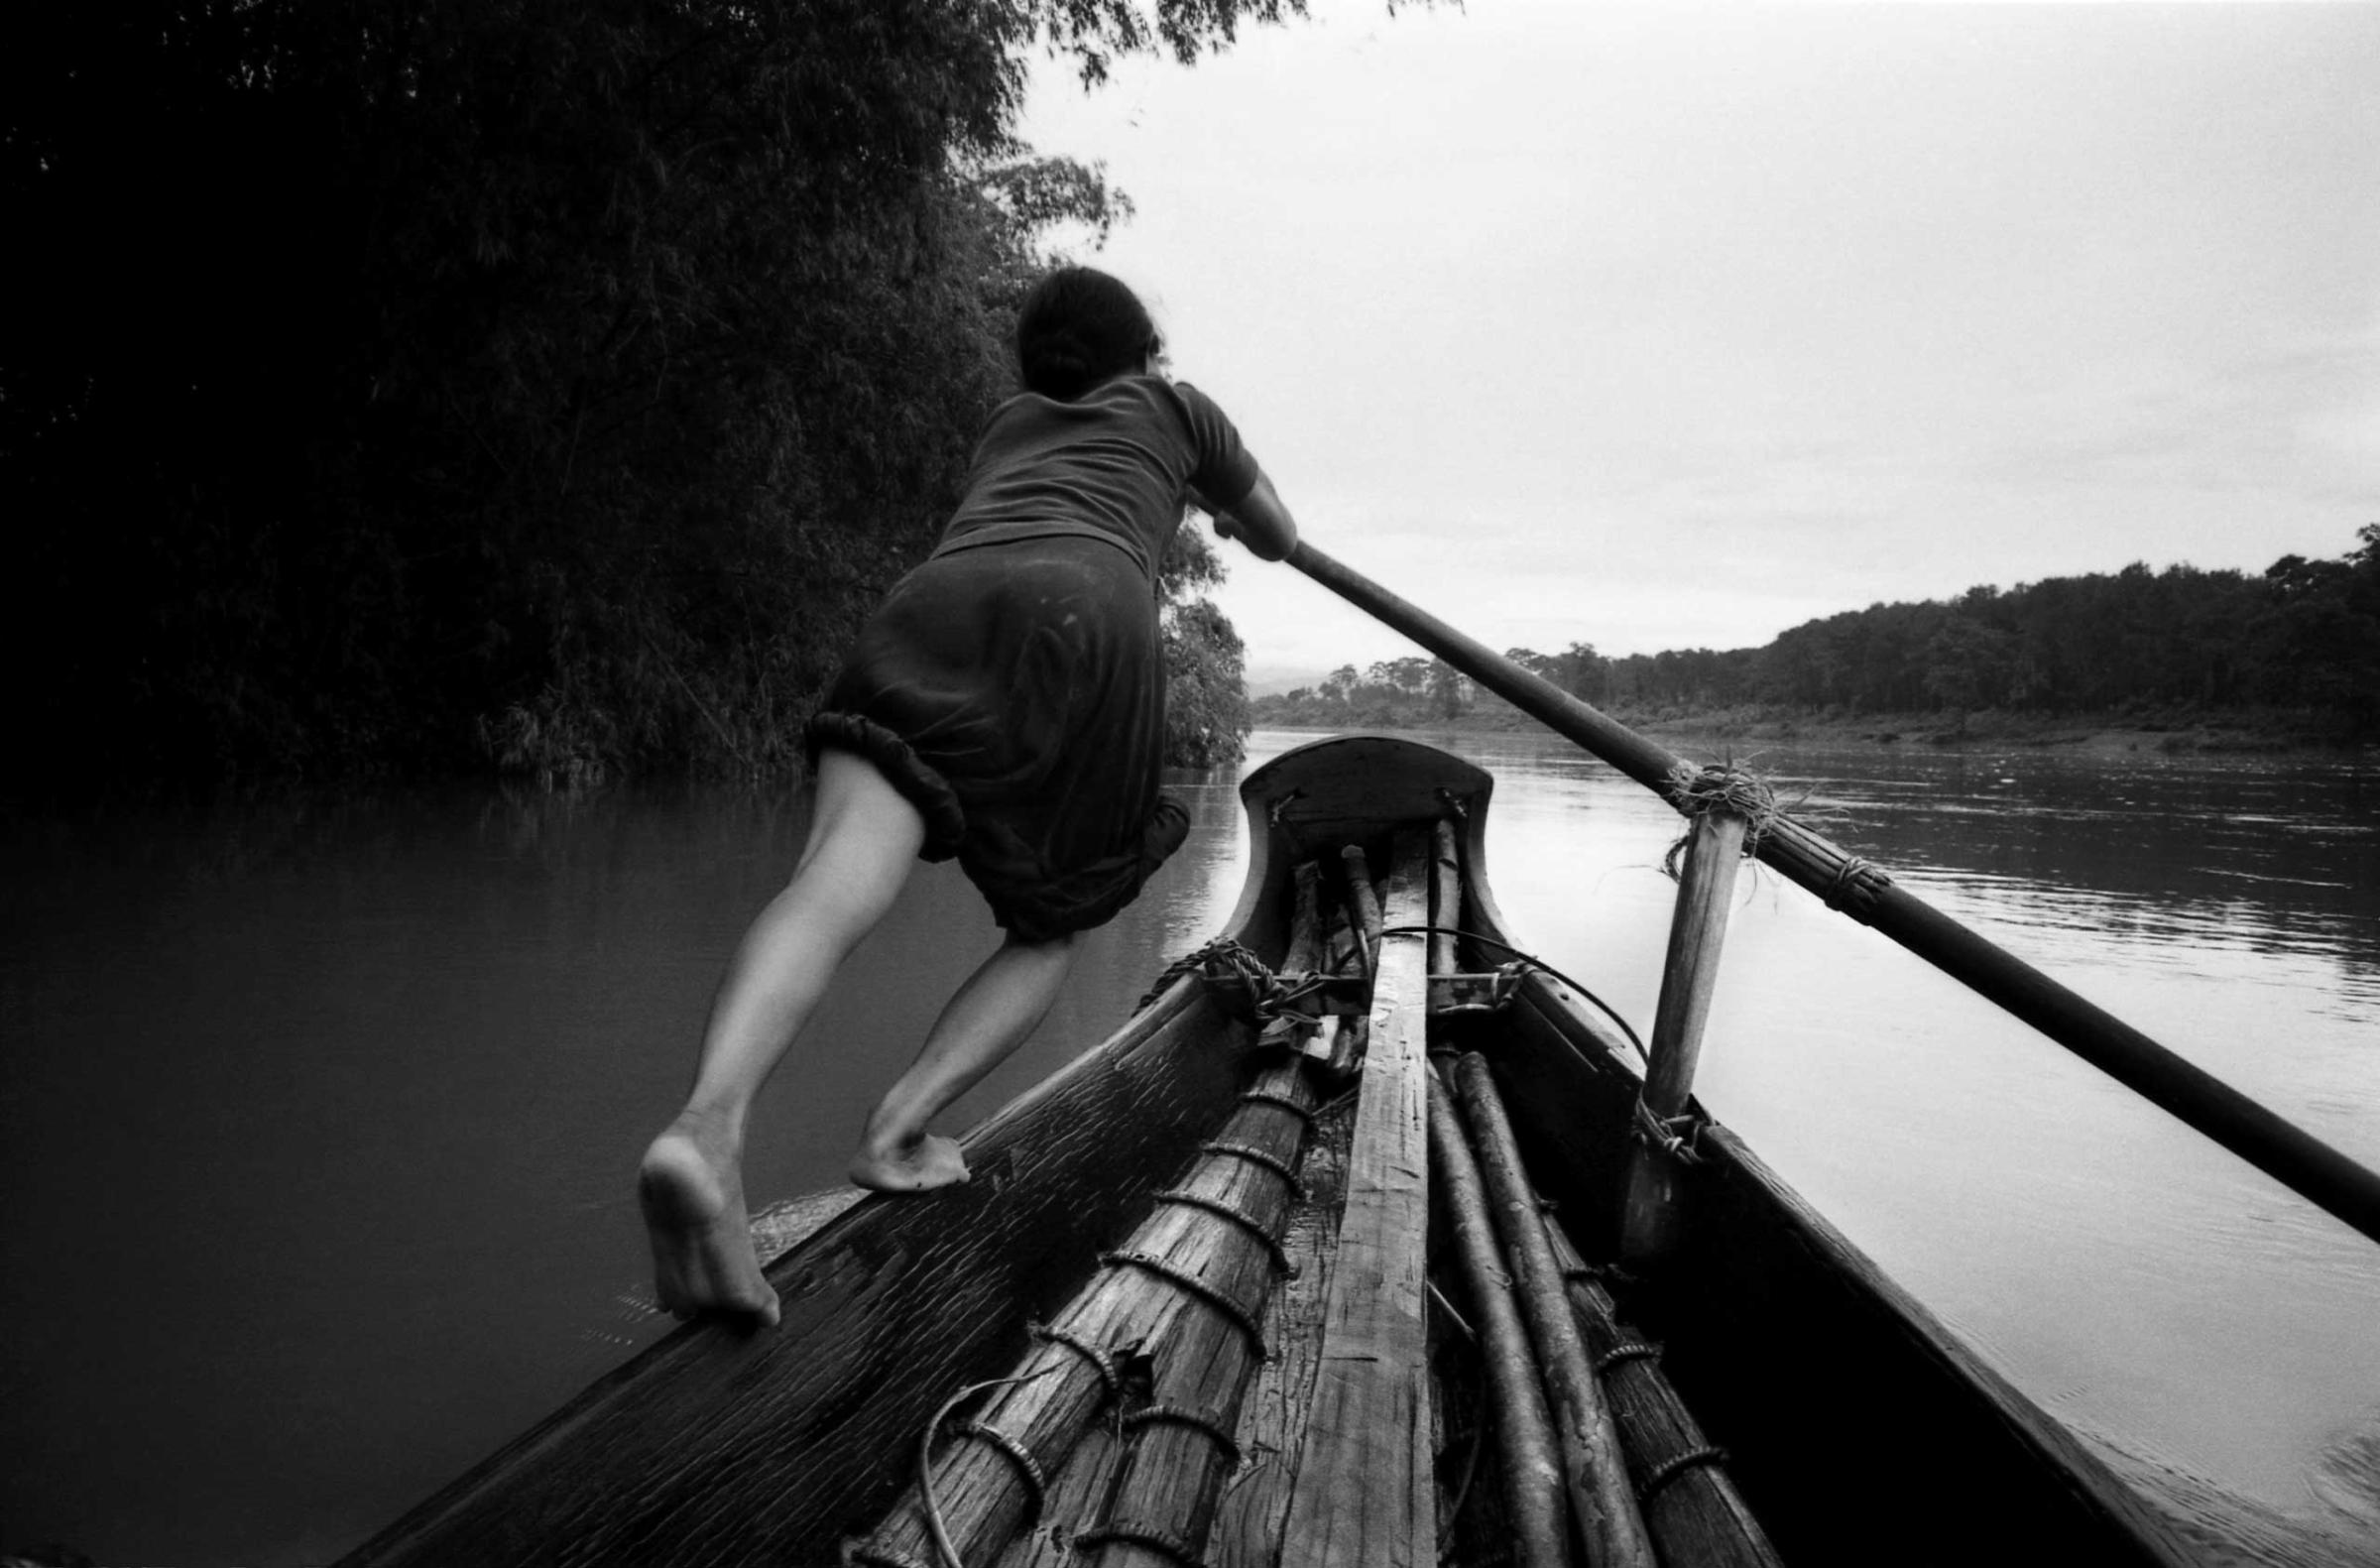 A boat girl rows a sampan across the Perfume River, Vietnam, 1961.